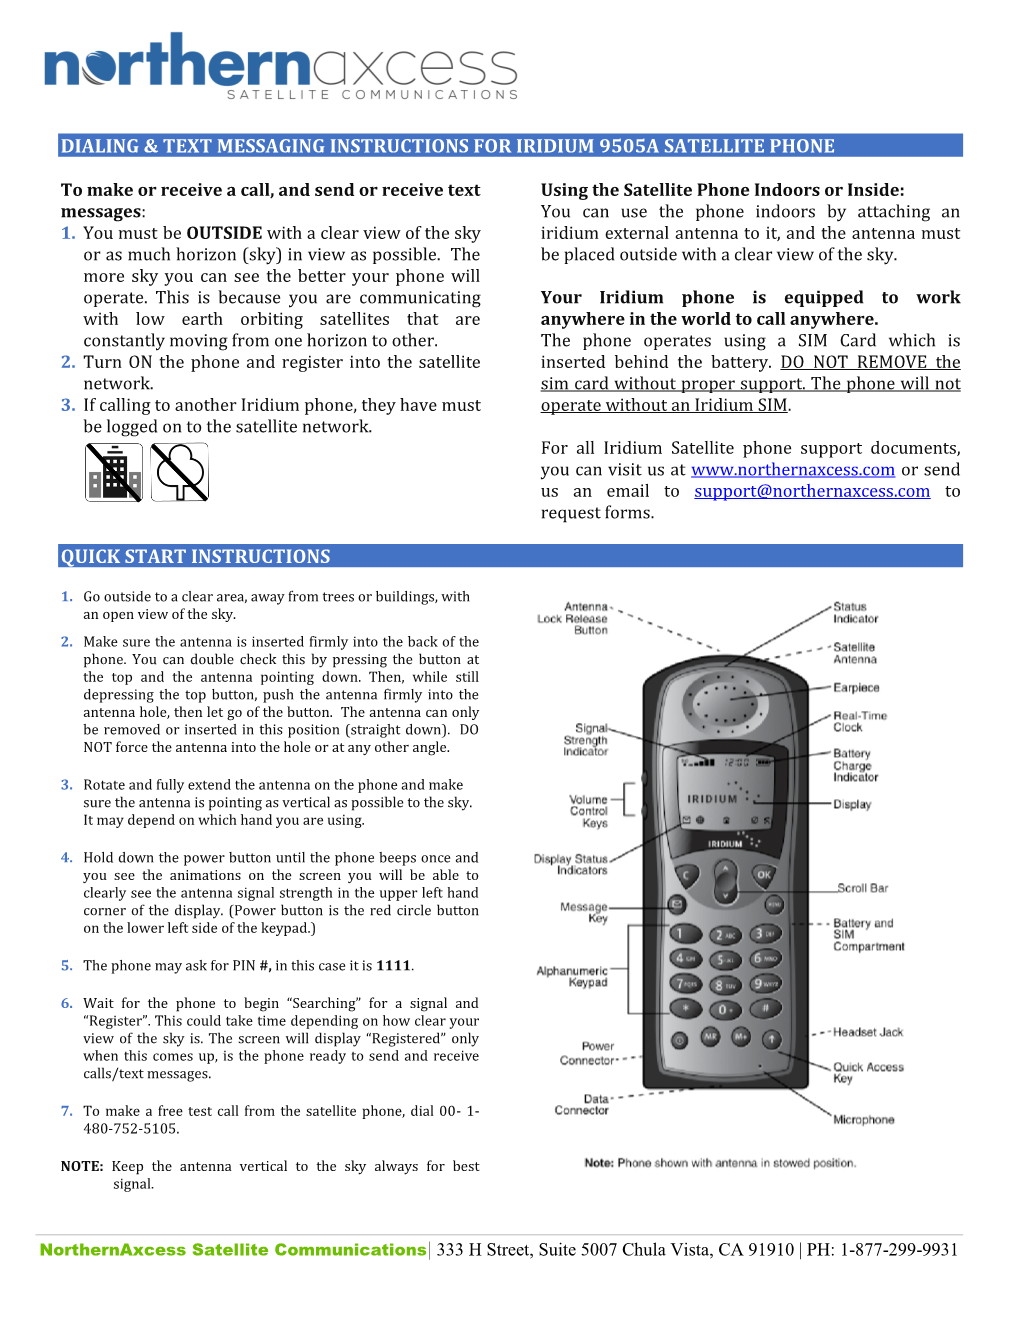 Iridium 9505A Dialing & Texting Instructions